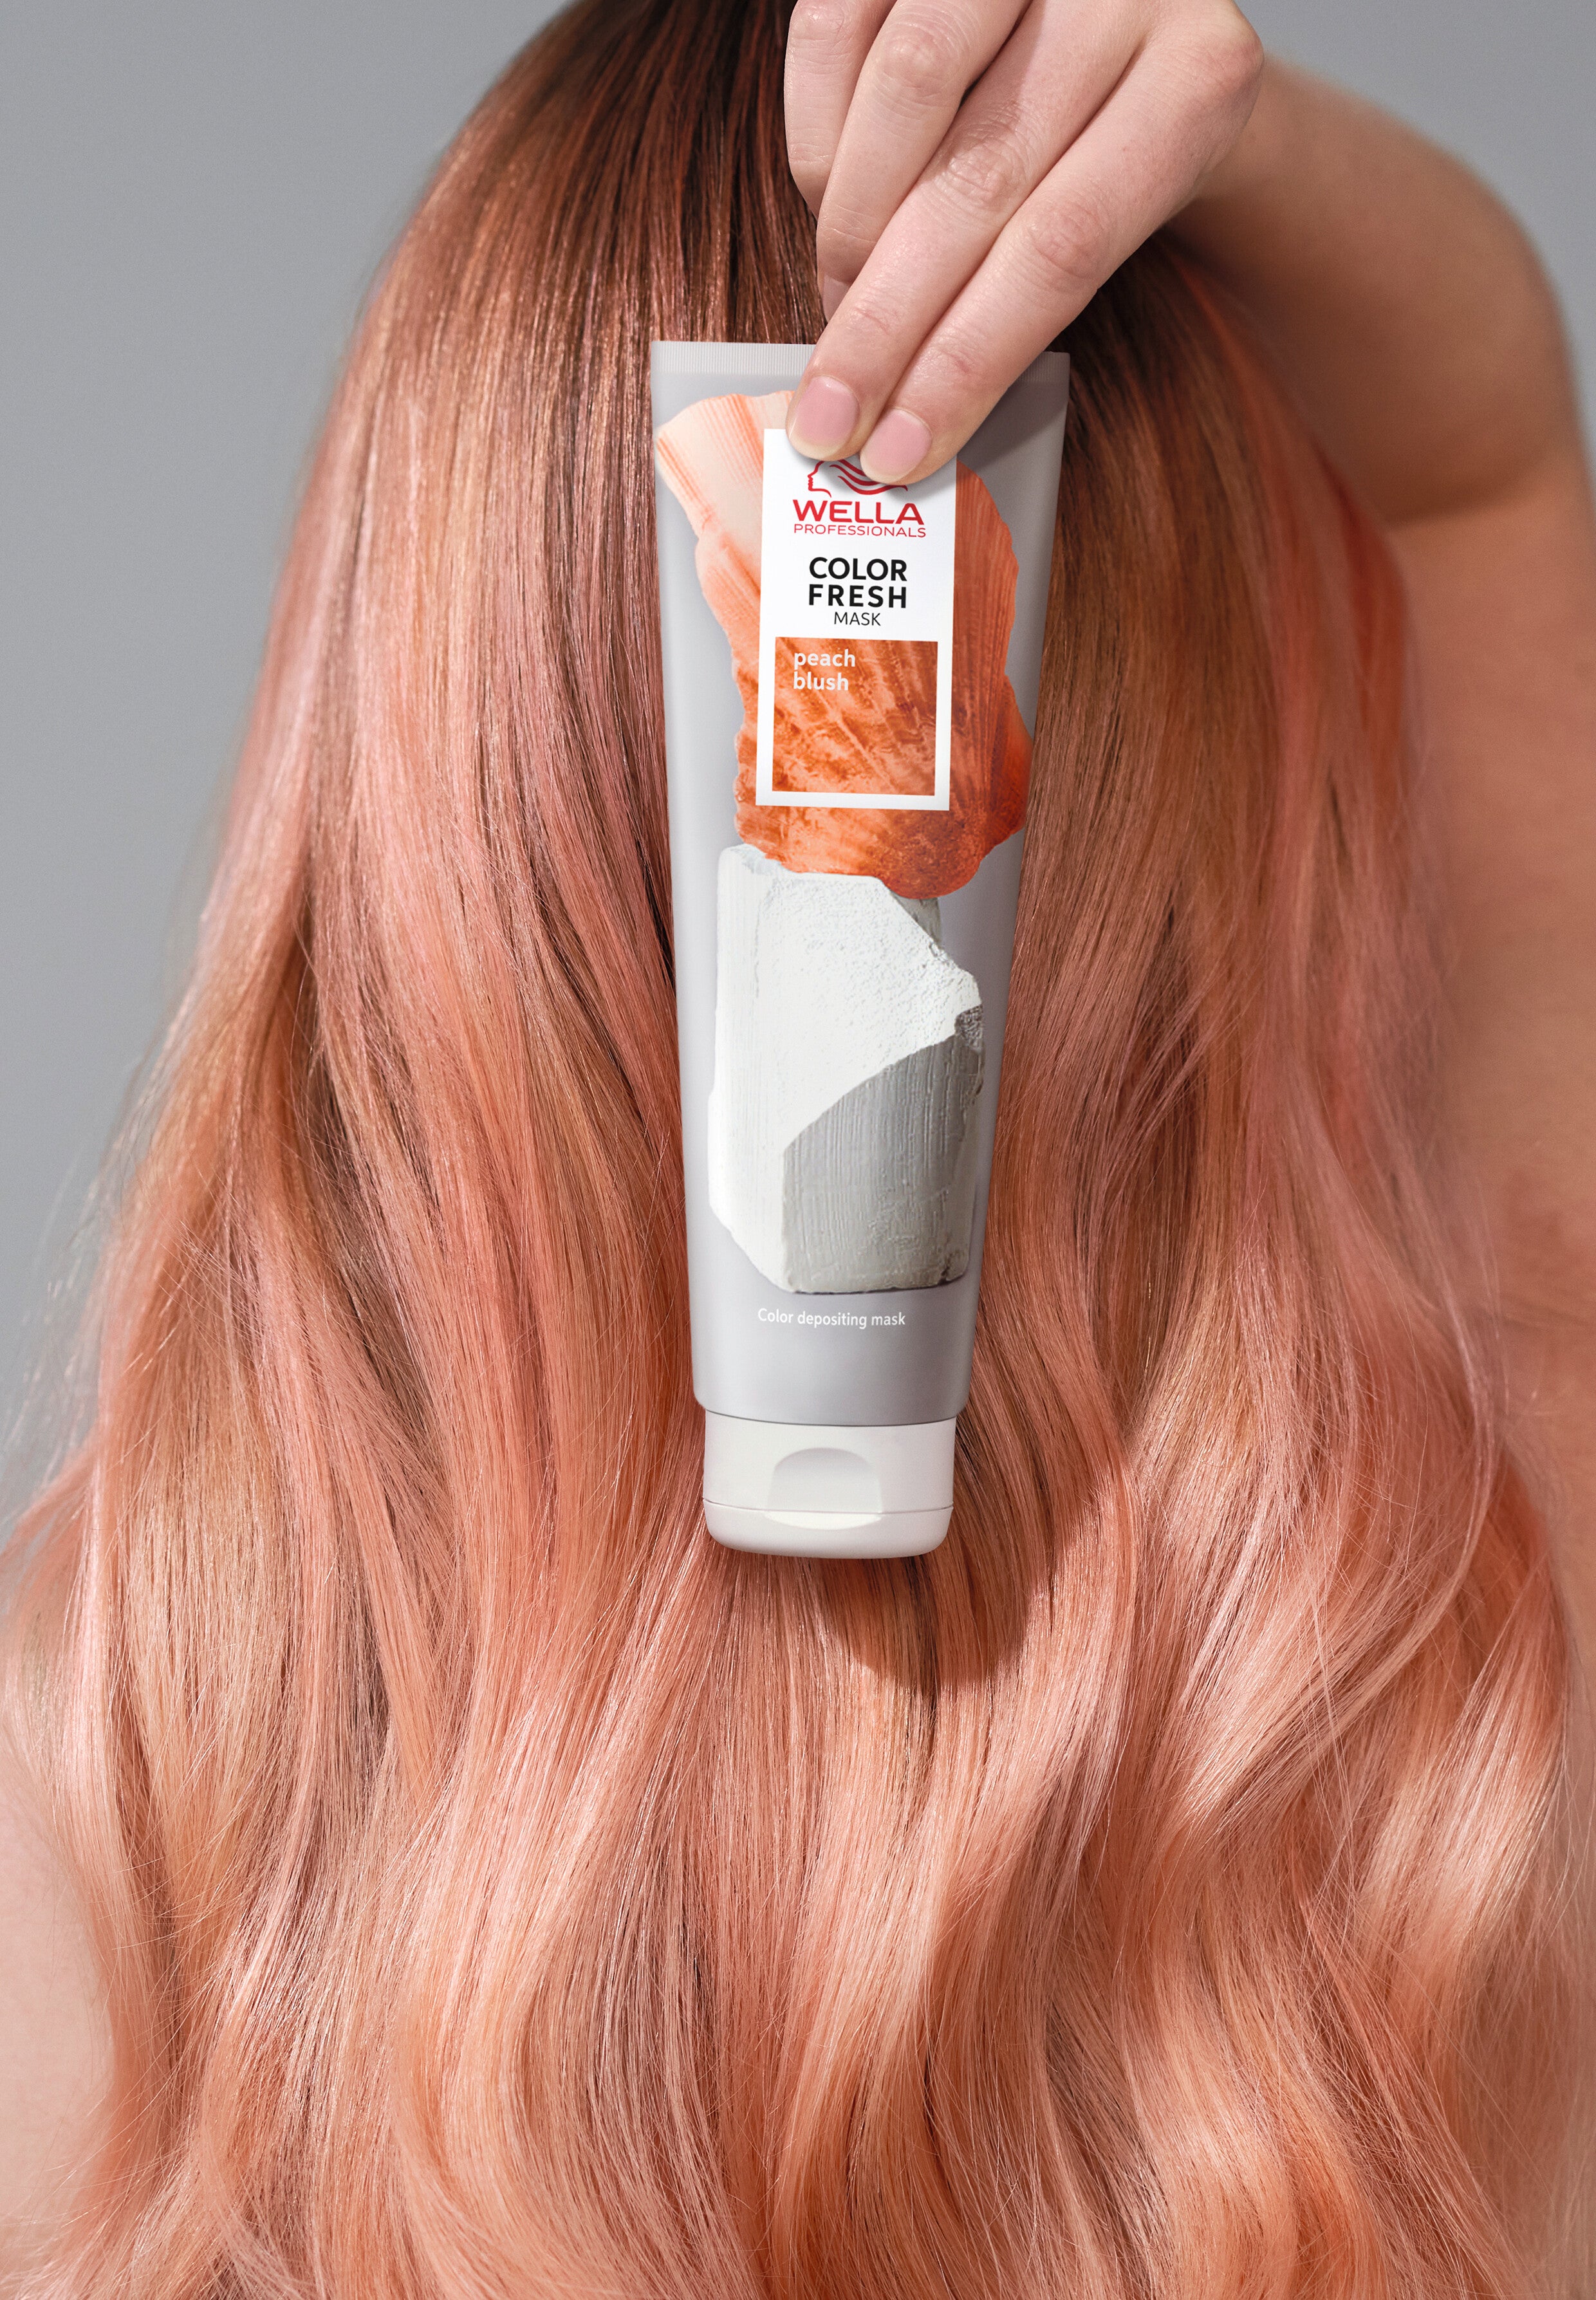 Wella Color Fresh Mask Peach Blush – Sarah Mason, 41% OFF